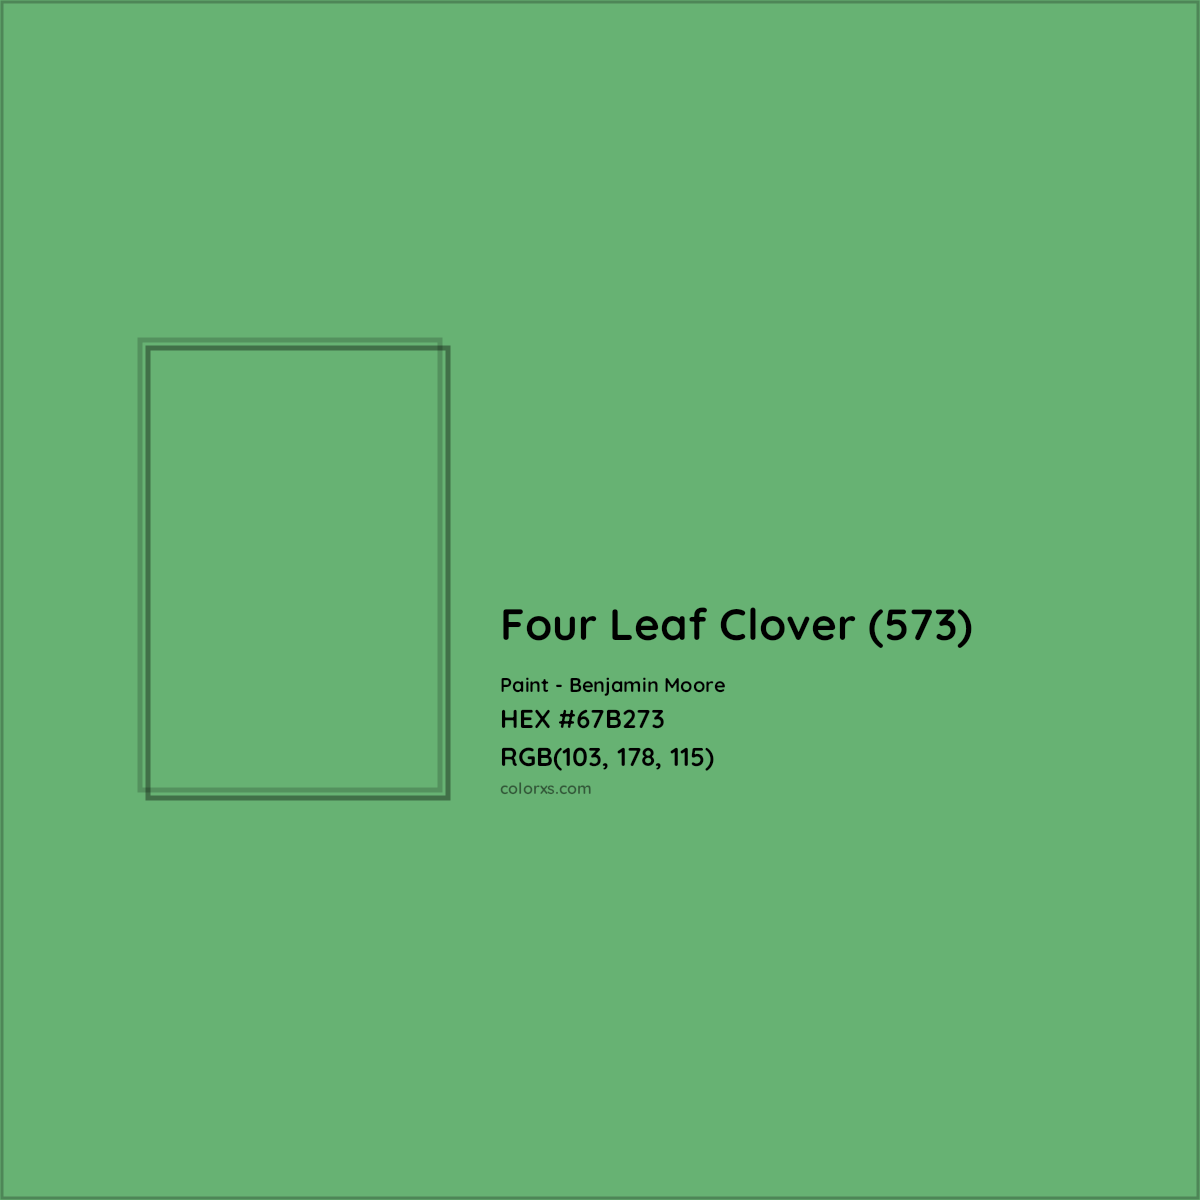 HEX #67B273 Four Leaf Clover (573) Paint Benjamin Moore - Color Code